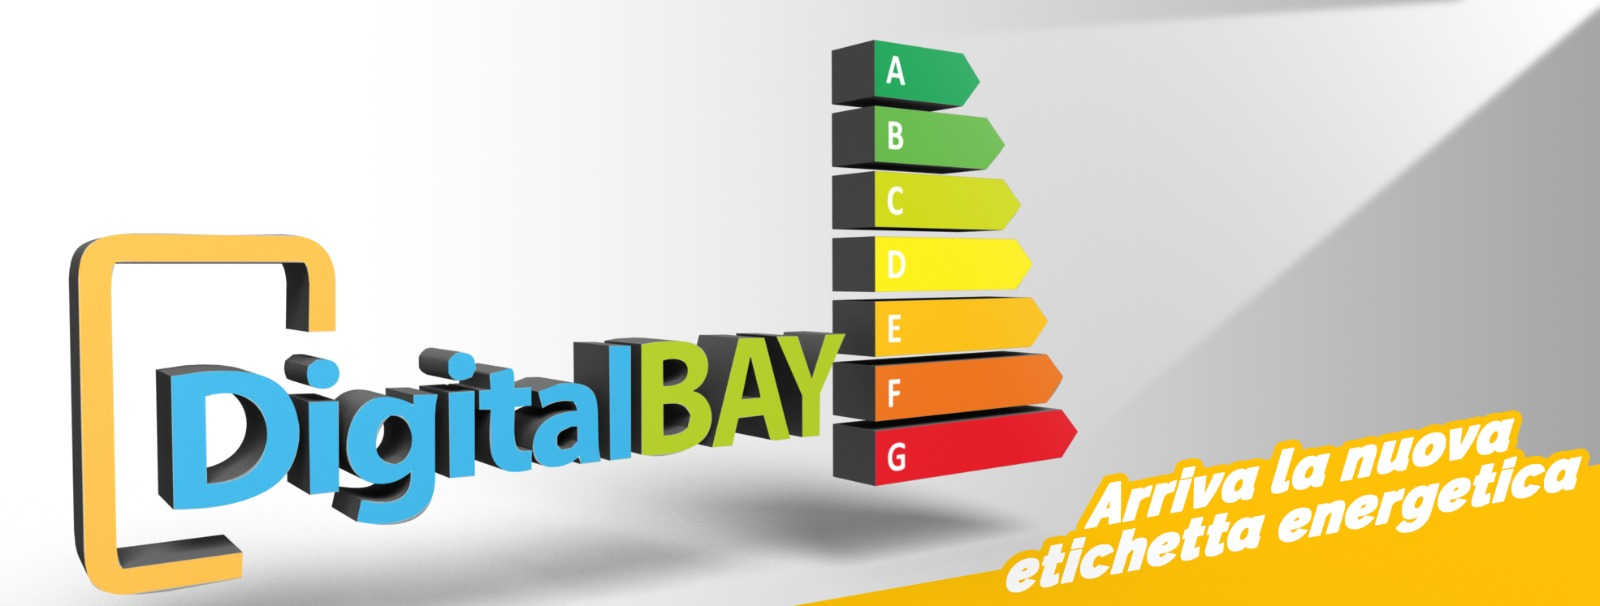 Digitalbay Nuova Classe Energetica